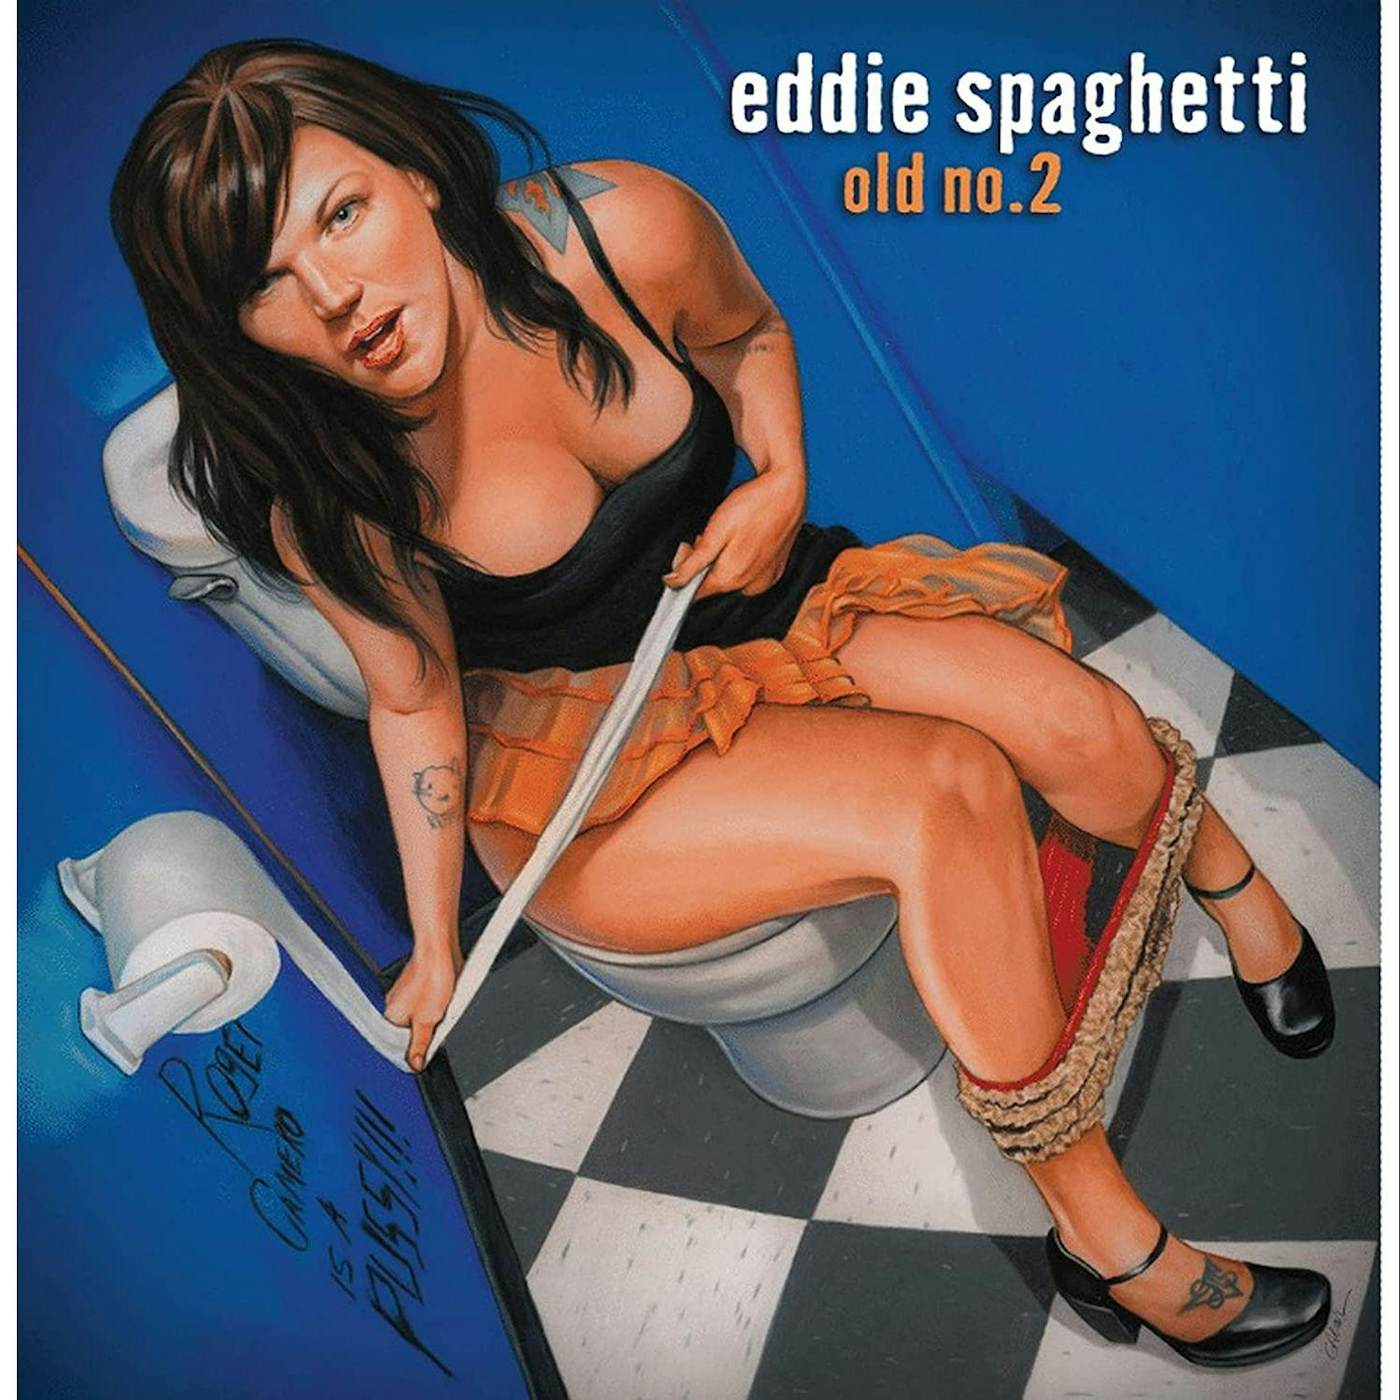 Eddie Spaghetti Old No. 2 Vinyl Record